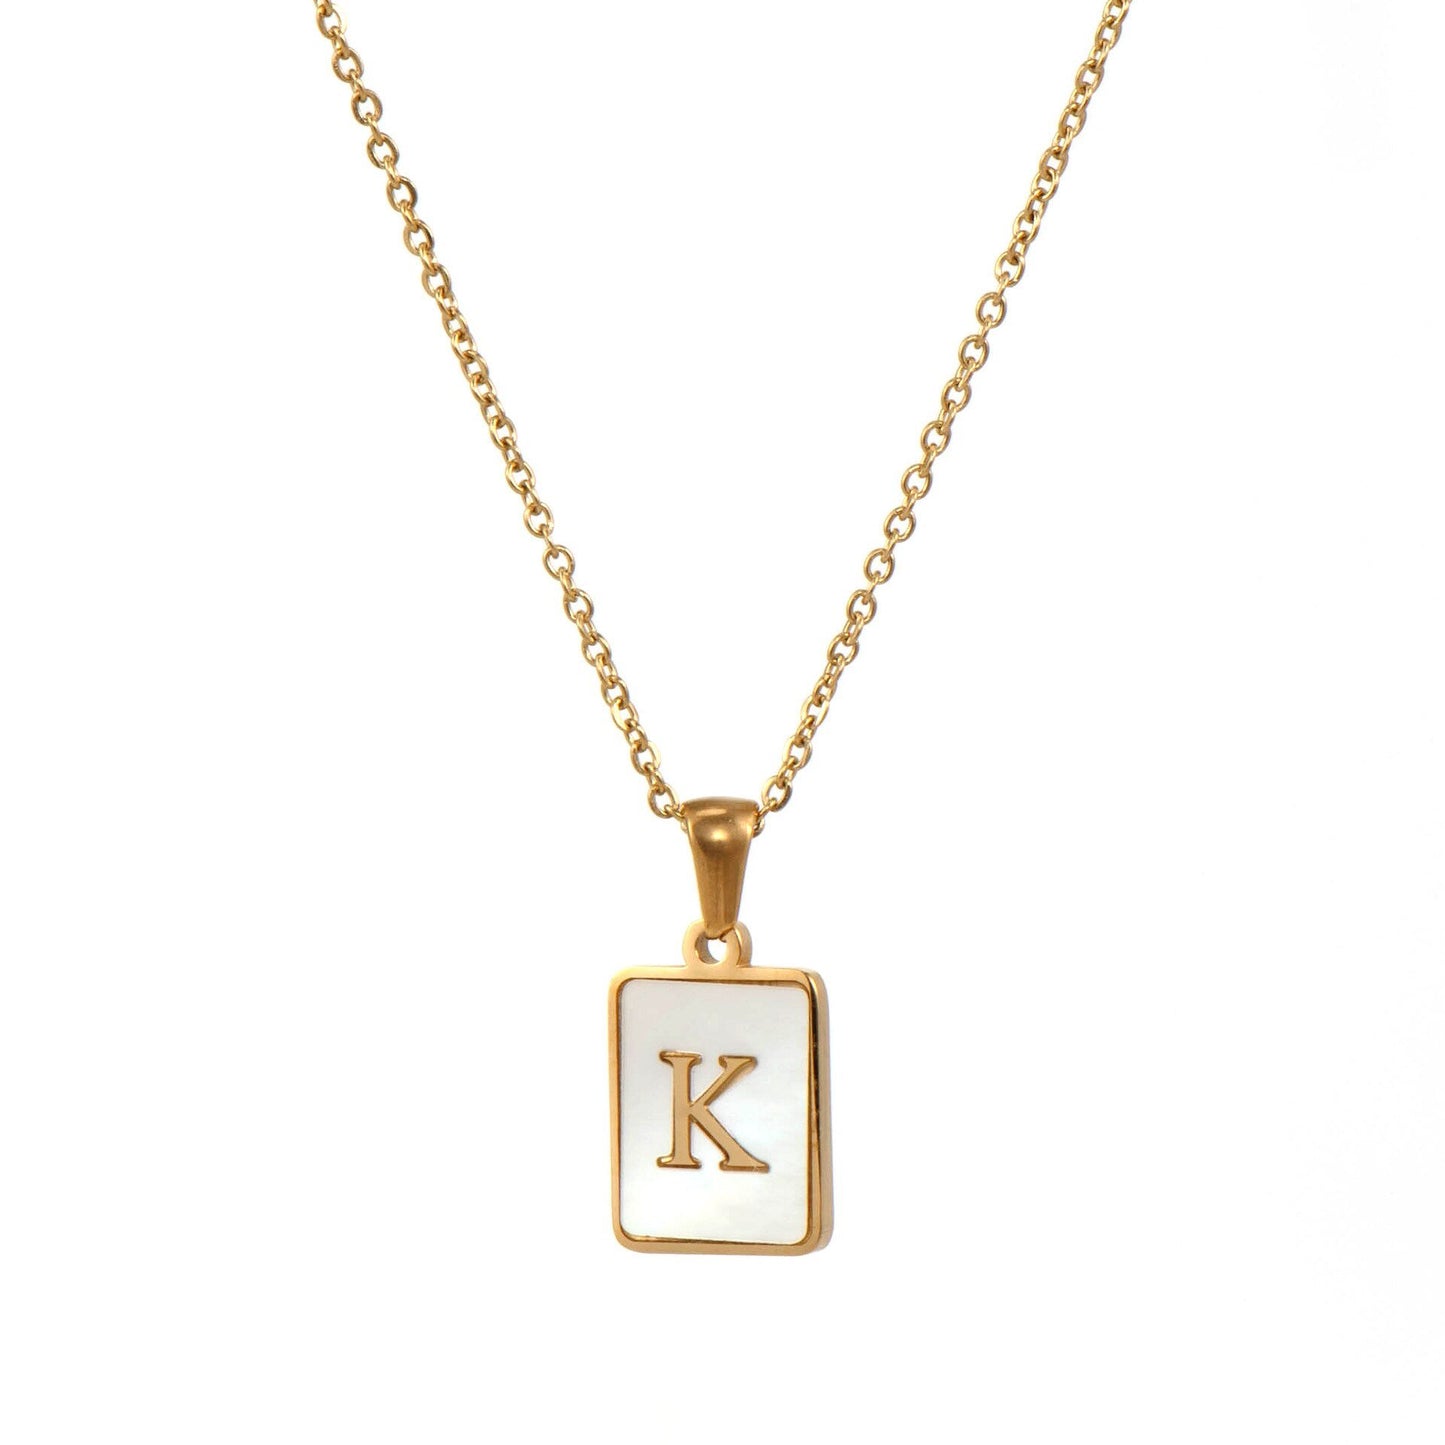 Gold Mother of Pearl Monogram Necklace, Letter K.